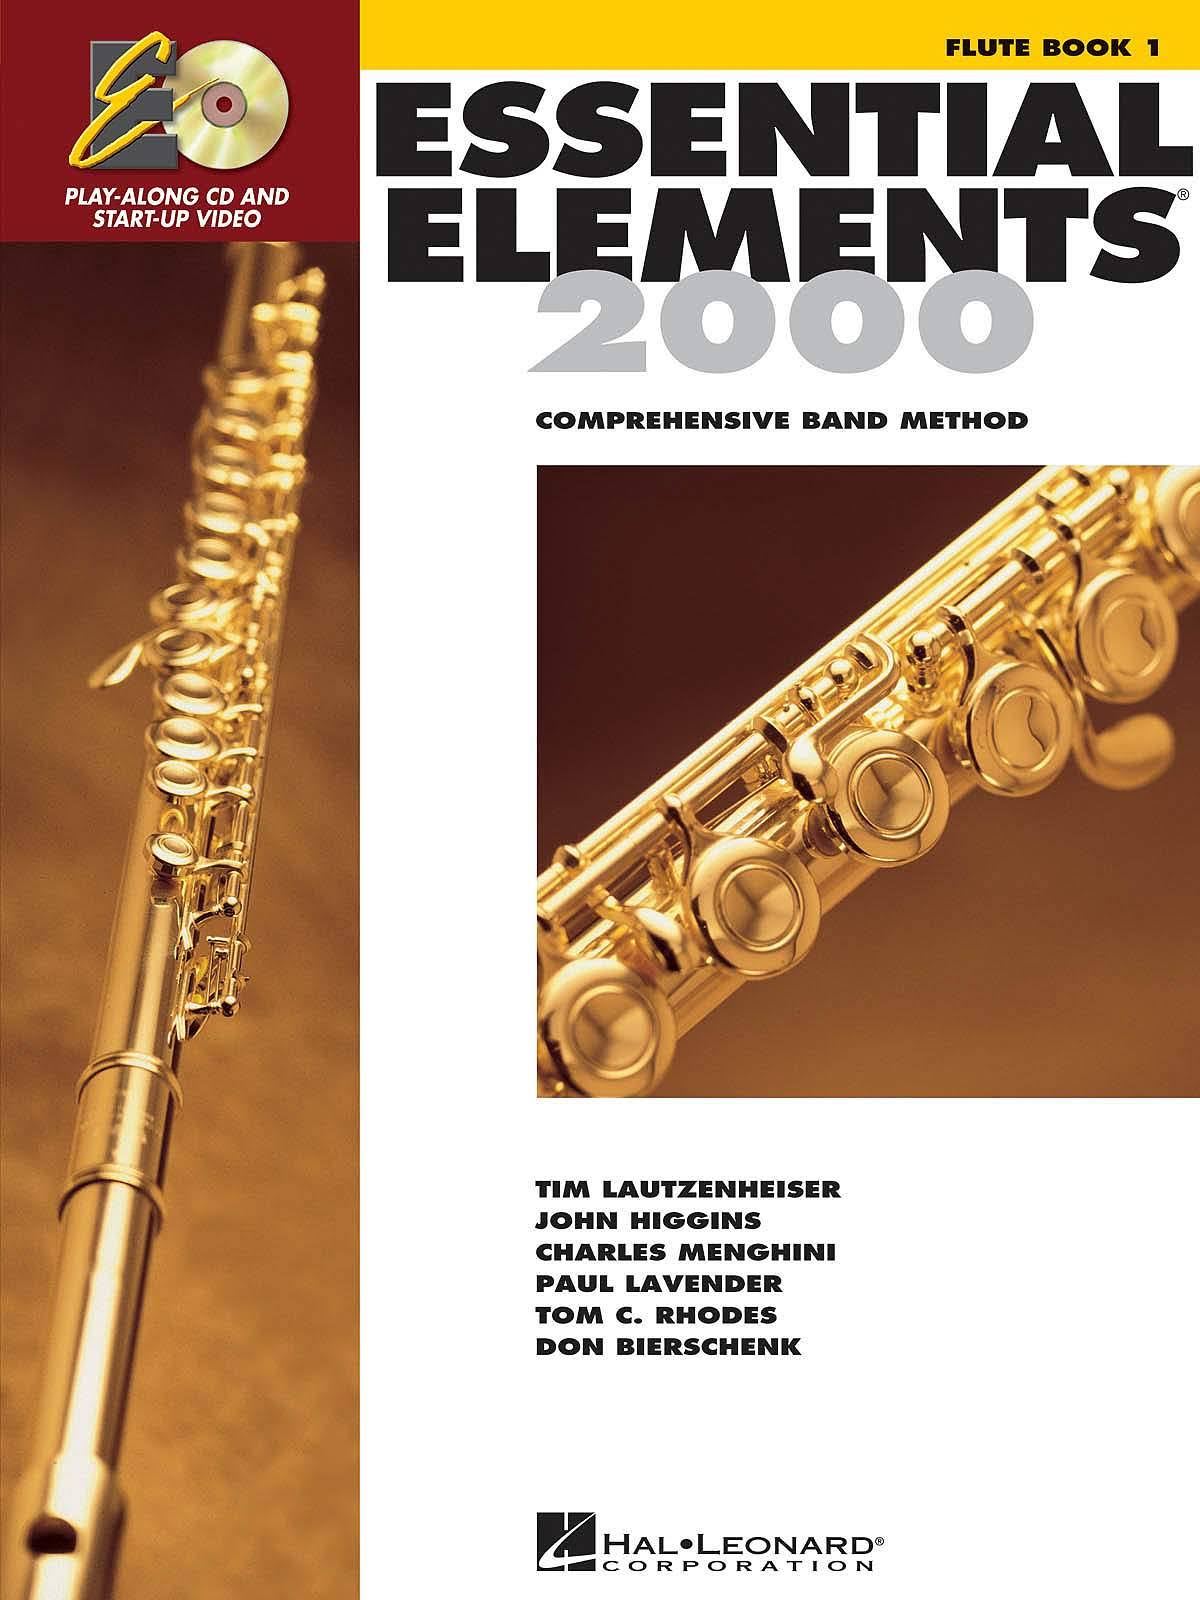 Essential Elements 2000: Flute Book 1 - Tom C. Rhodes